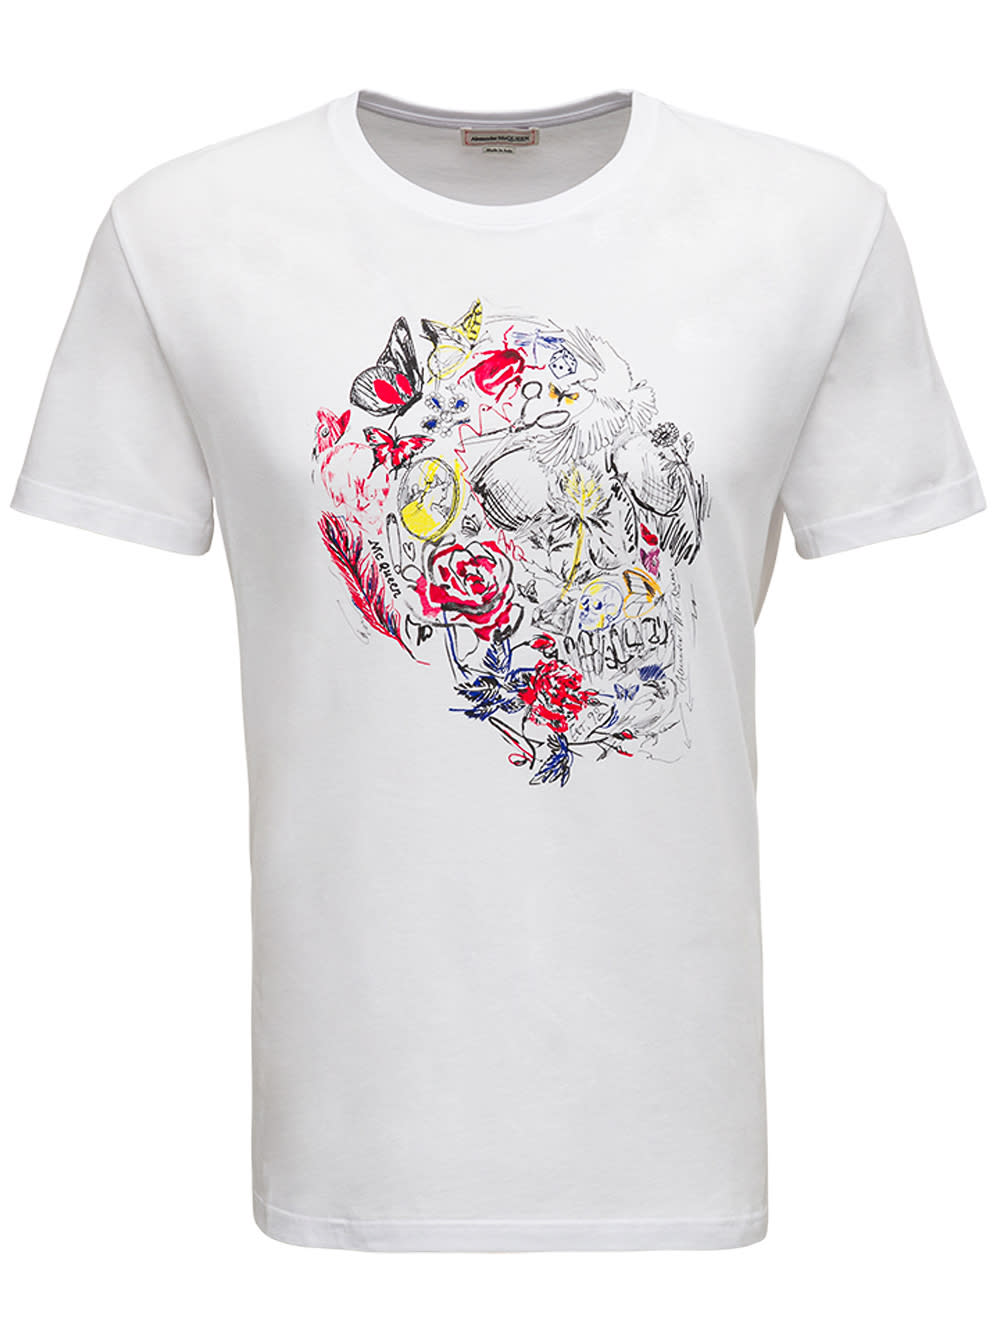 Alexander McQueen White Cotton T-shirt With Flower Skull Print